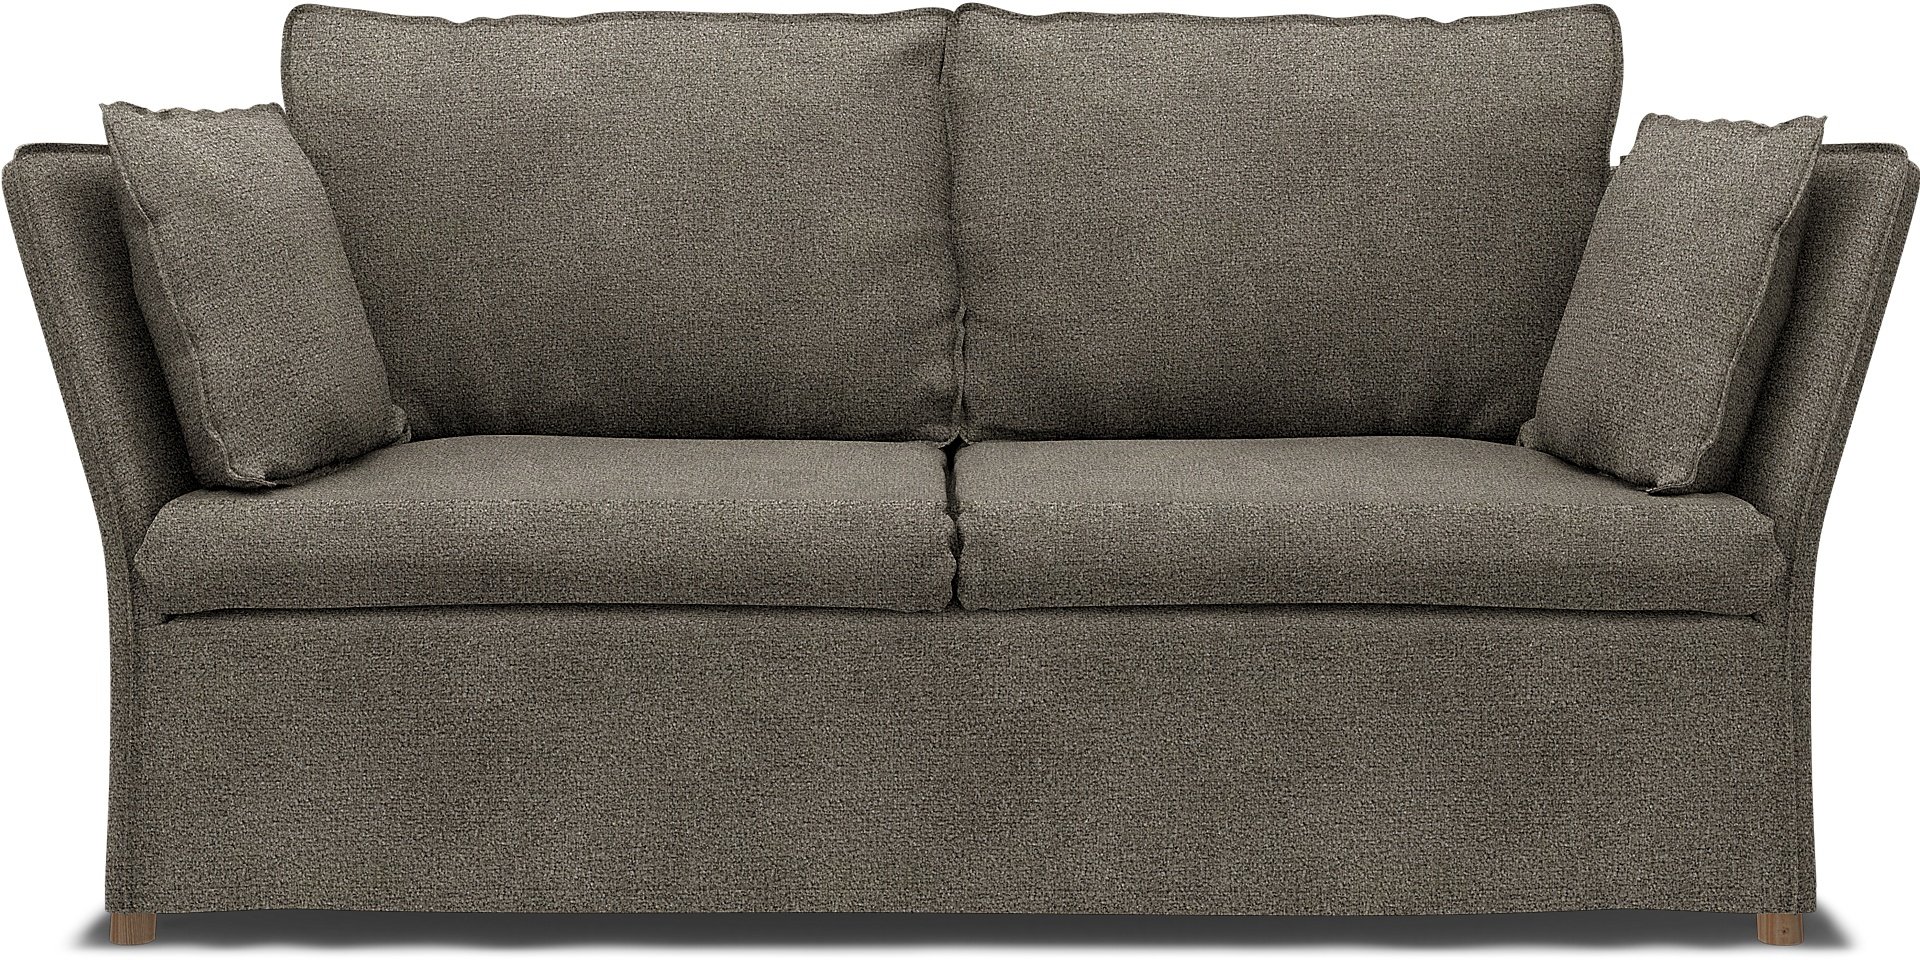 IKEA - Backsalen 2 seater sofa, Taupe, Boucle & Texture - Bemz